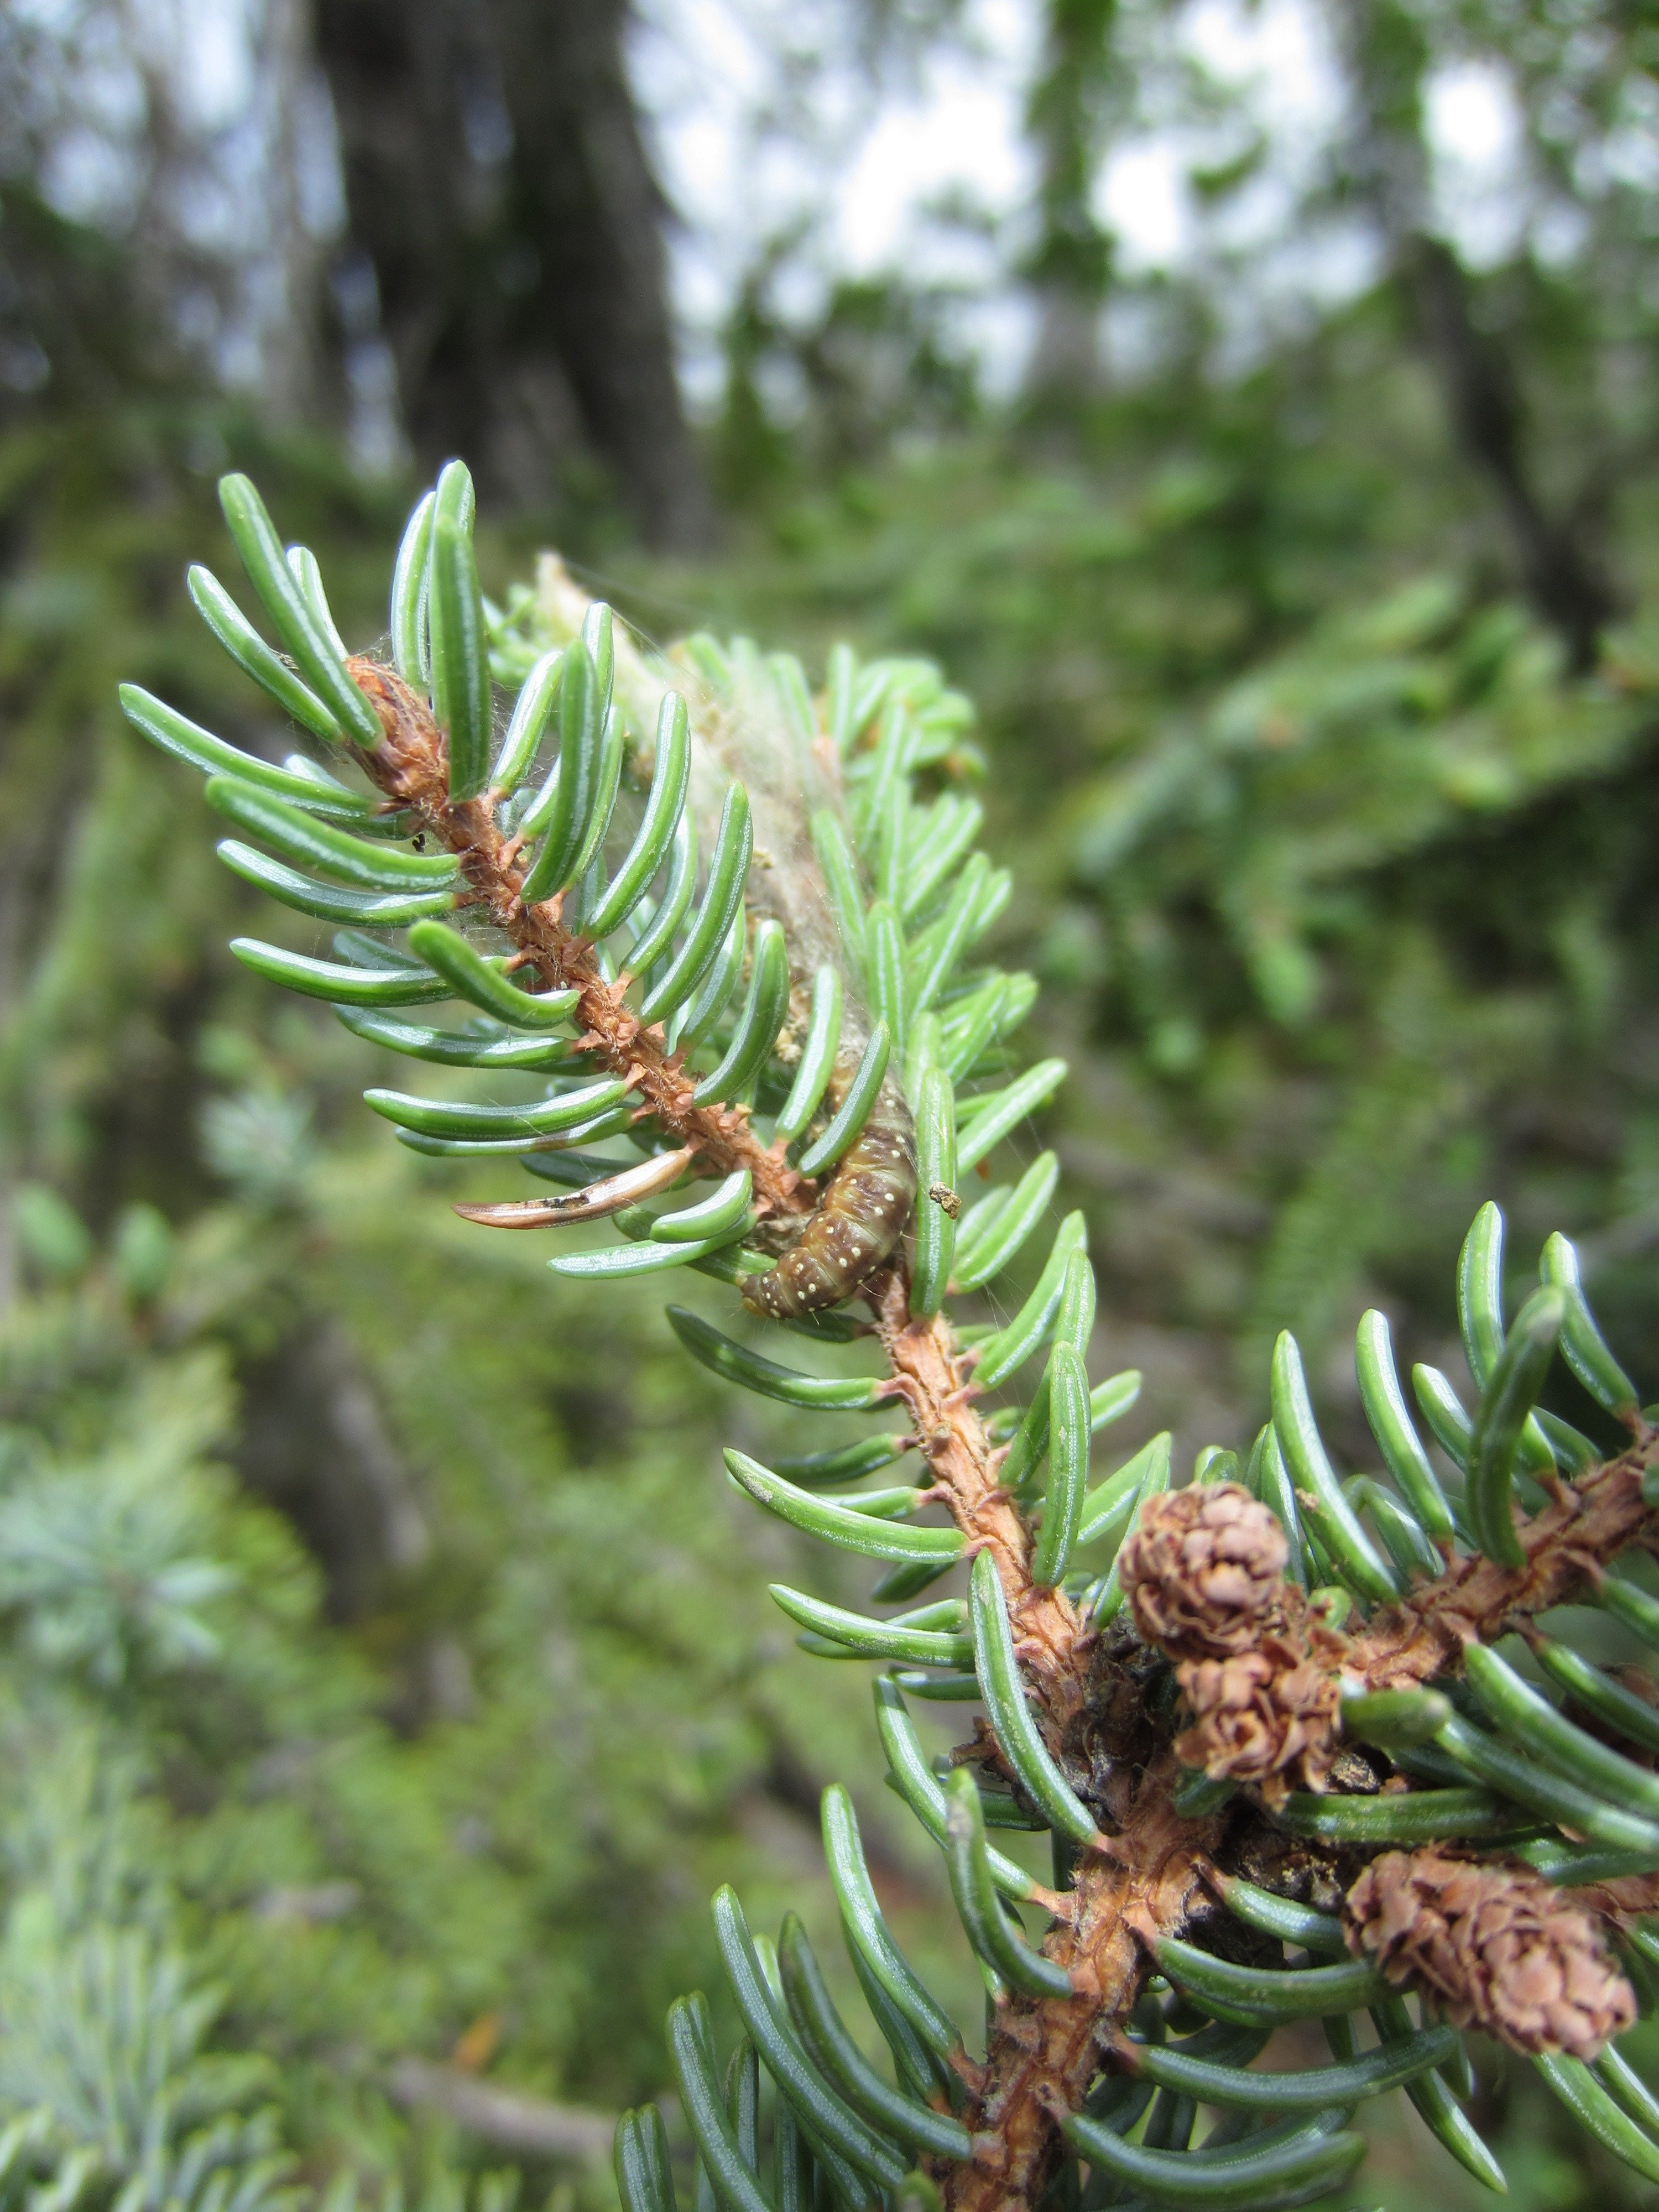 20150604 (21) - INSECT - spruce budworm larva - McCarthy Rd JEM.JPG